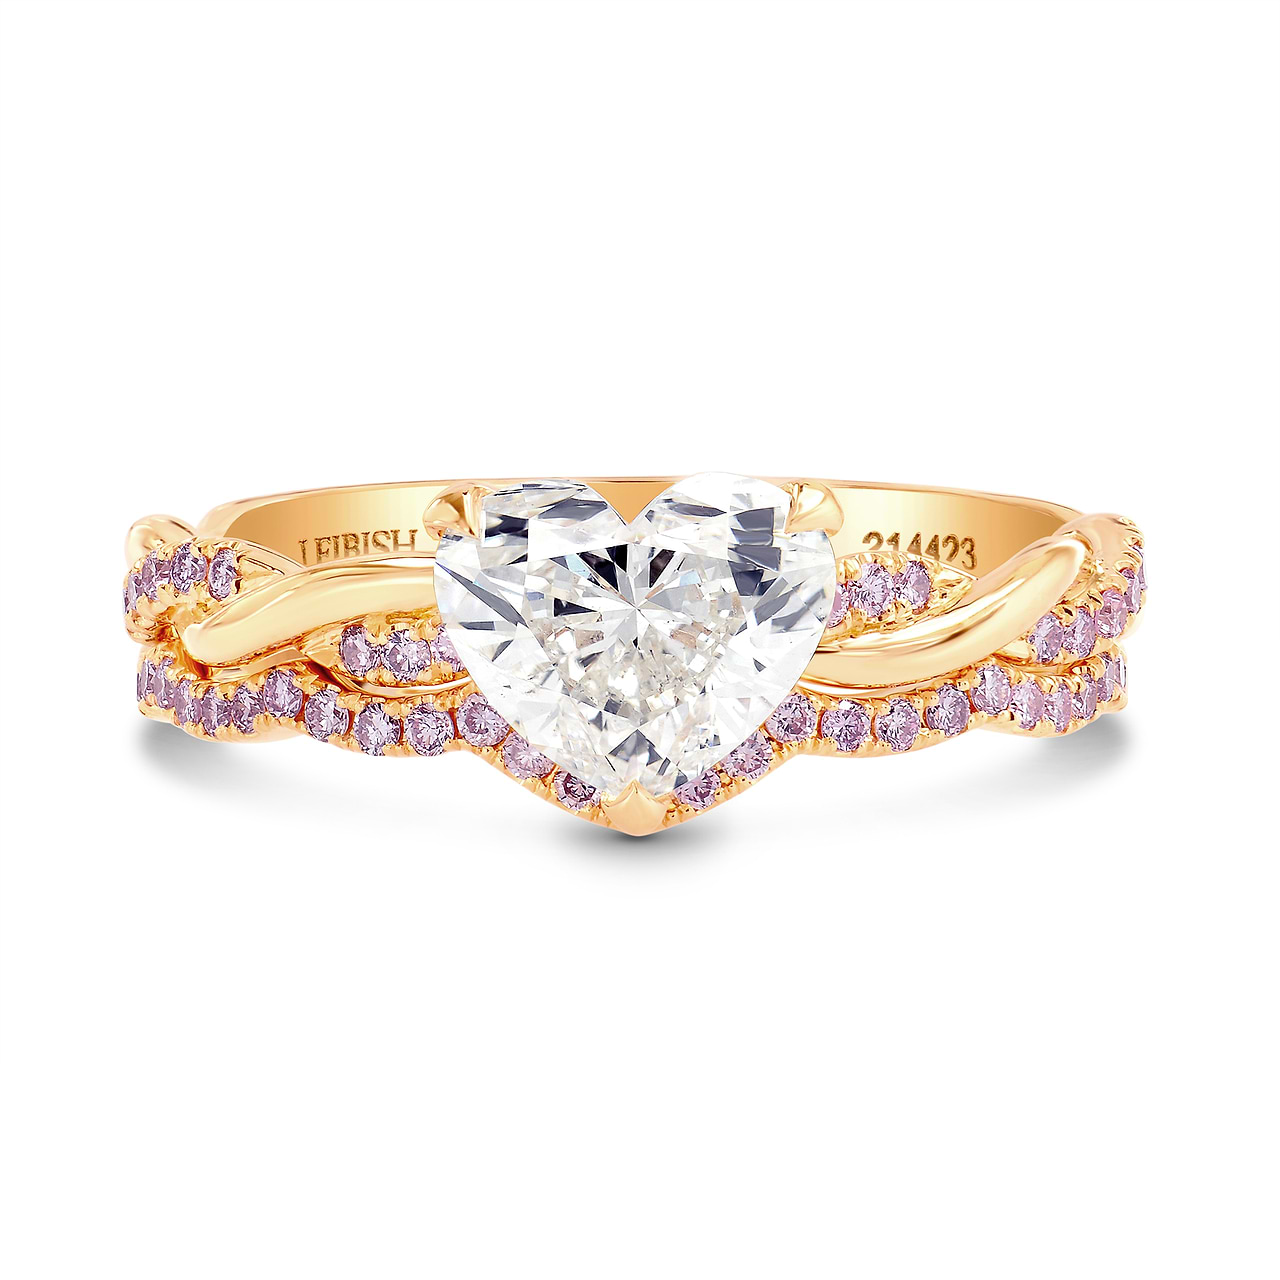 Rose Gold Woven Heart & Pink Diamond Engagement Wedding Ring Set, SKU 214423 (1.8Ct TW)